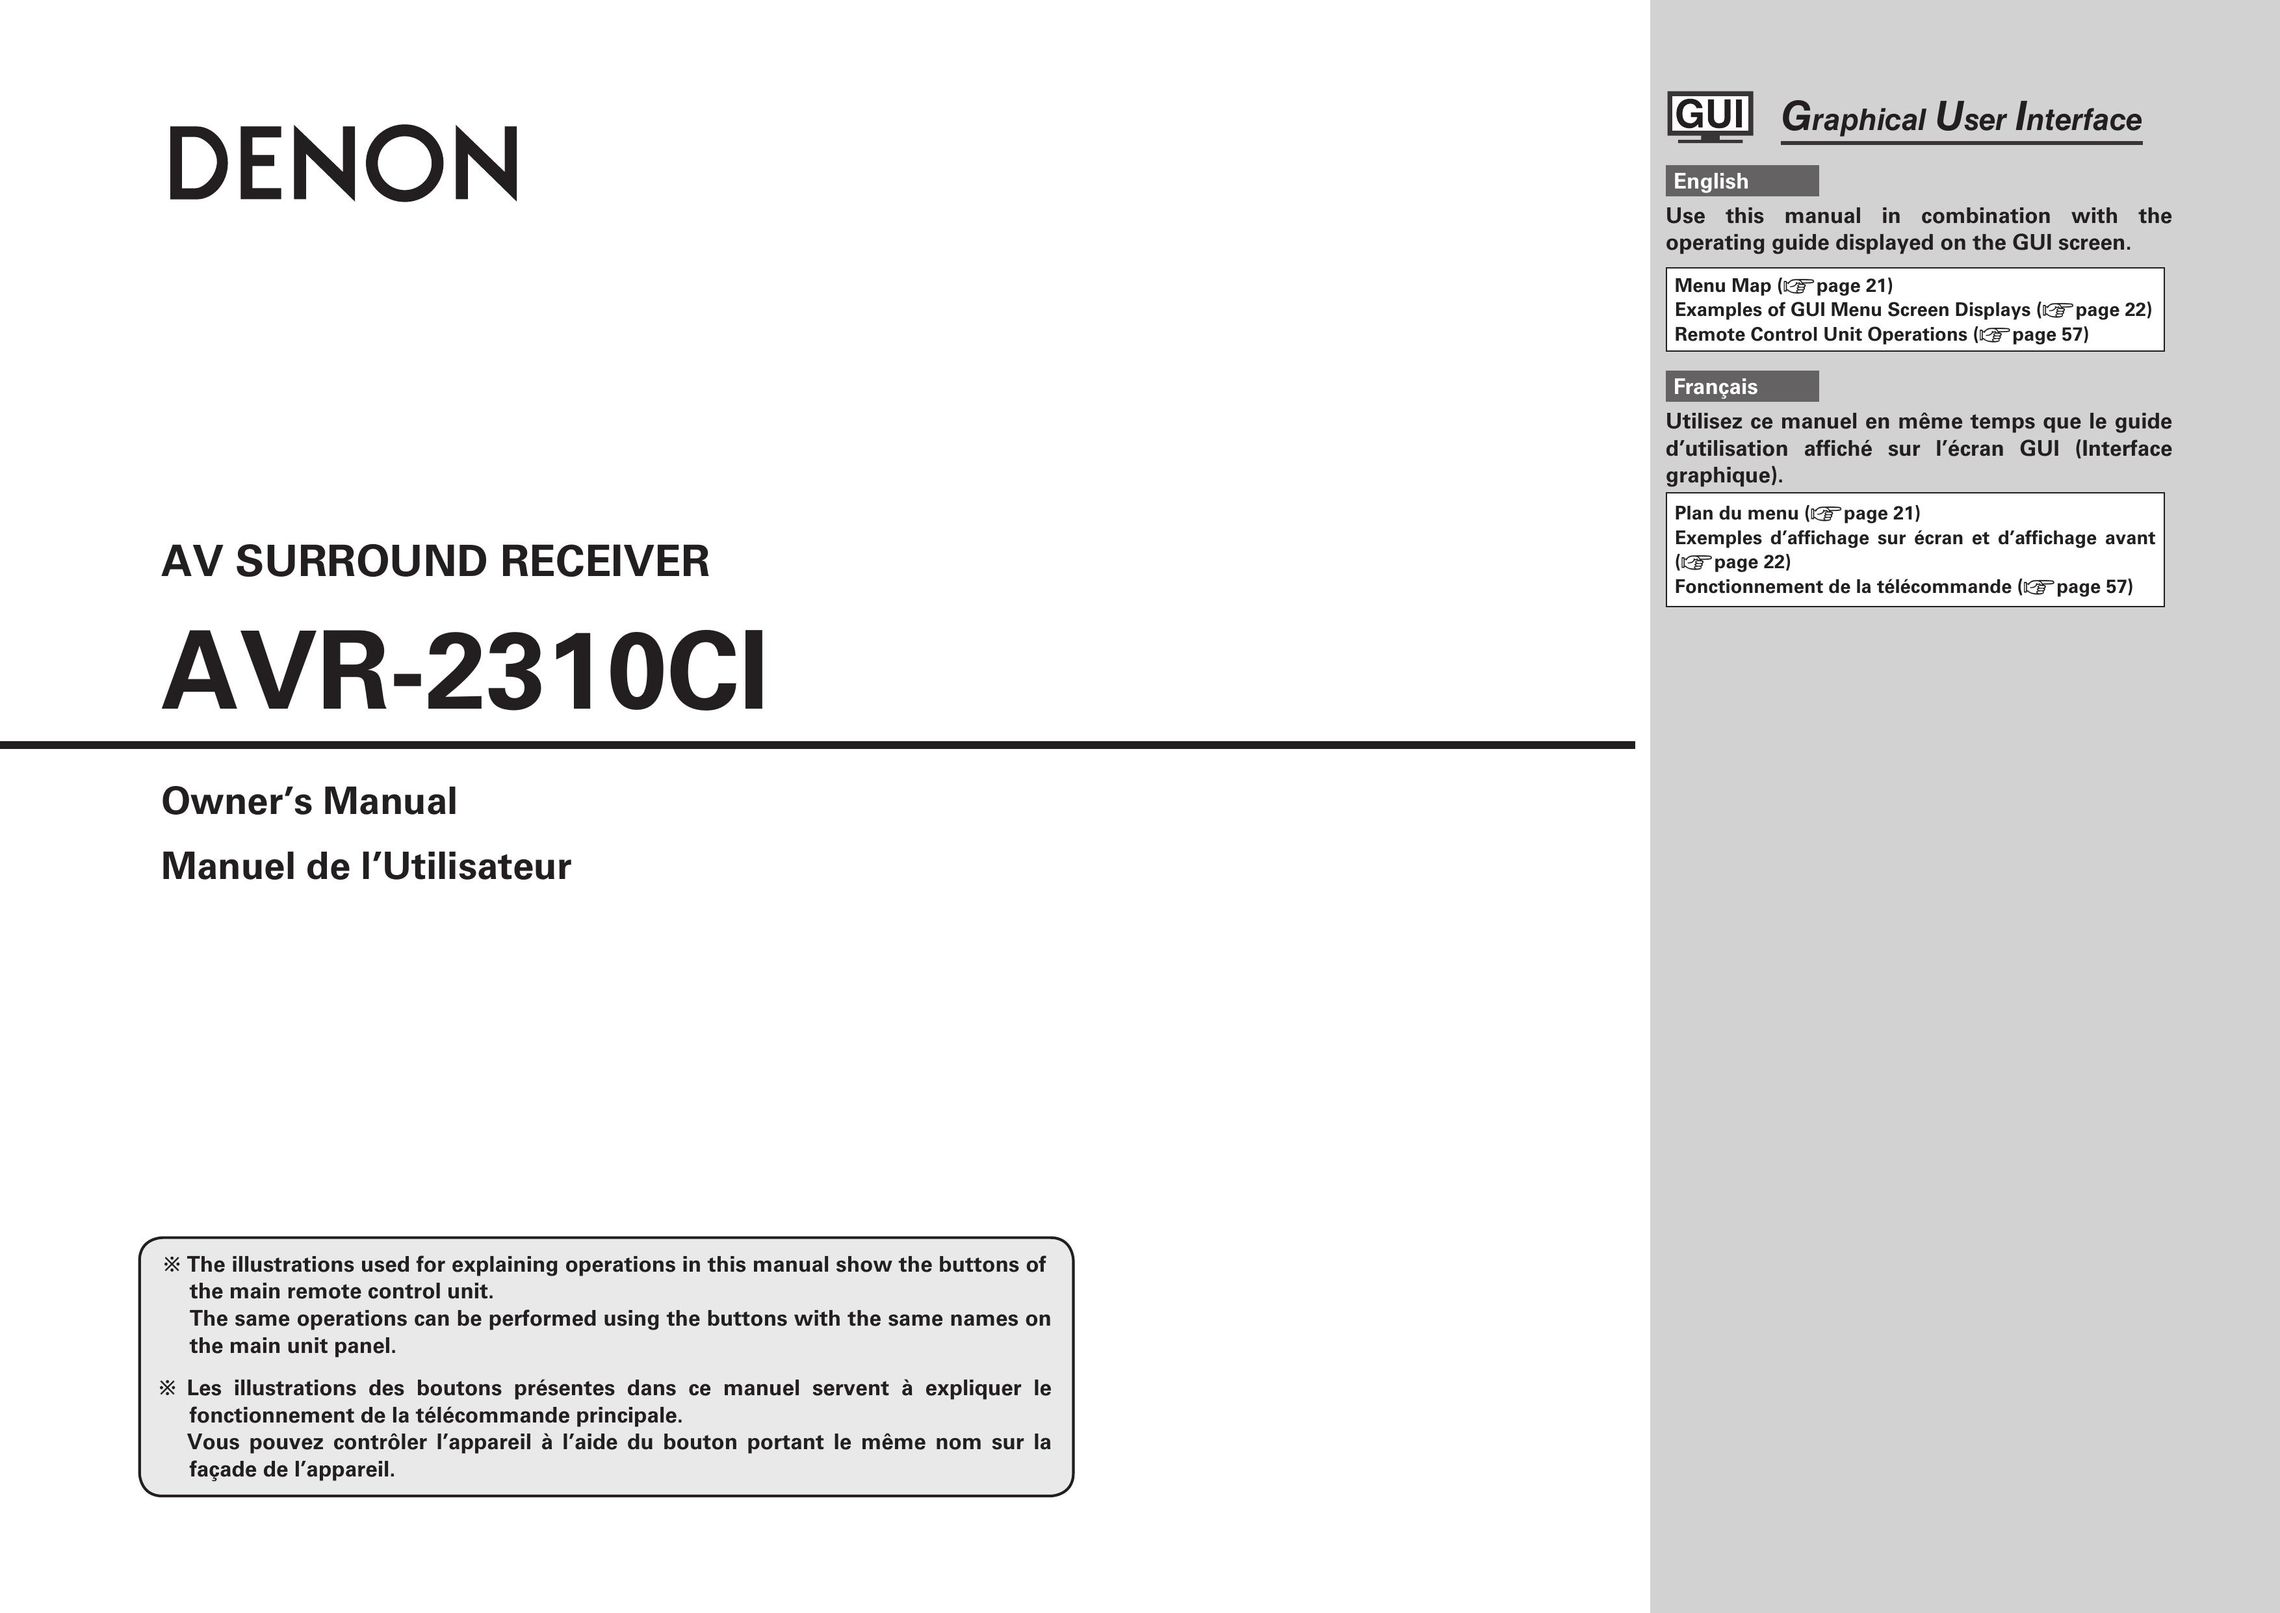 Denon AVR-2310CI Home Theater System User Manual